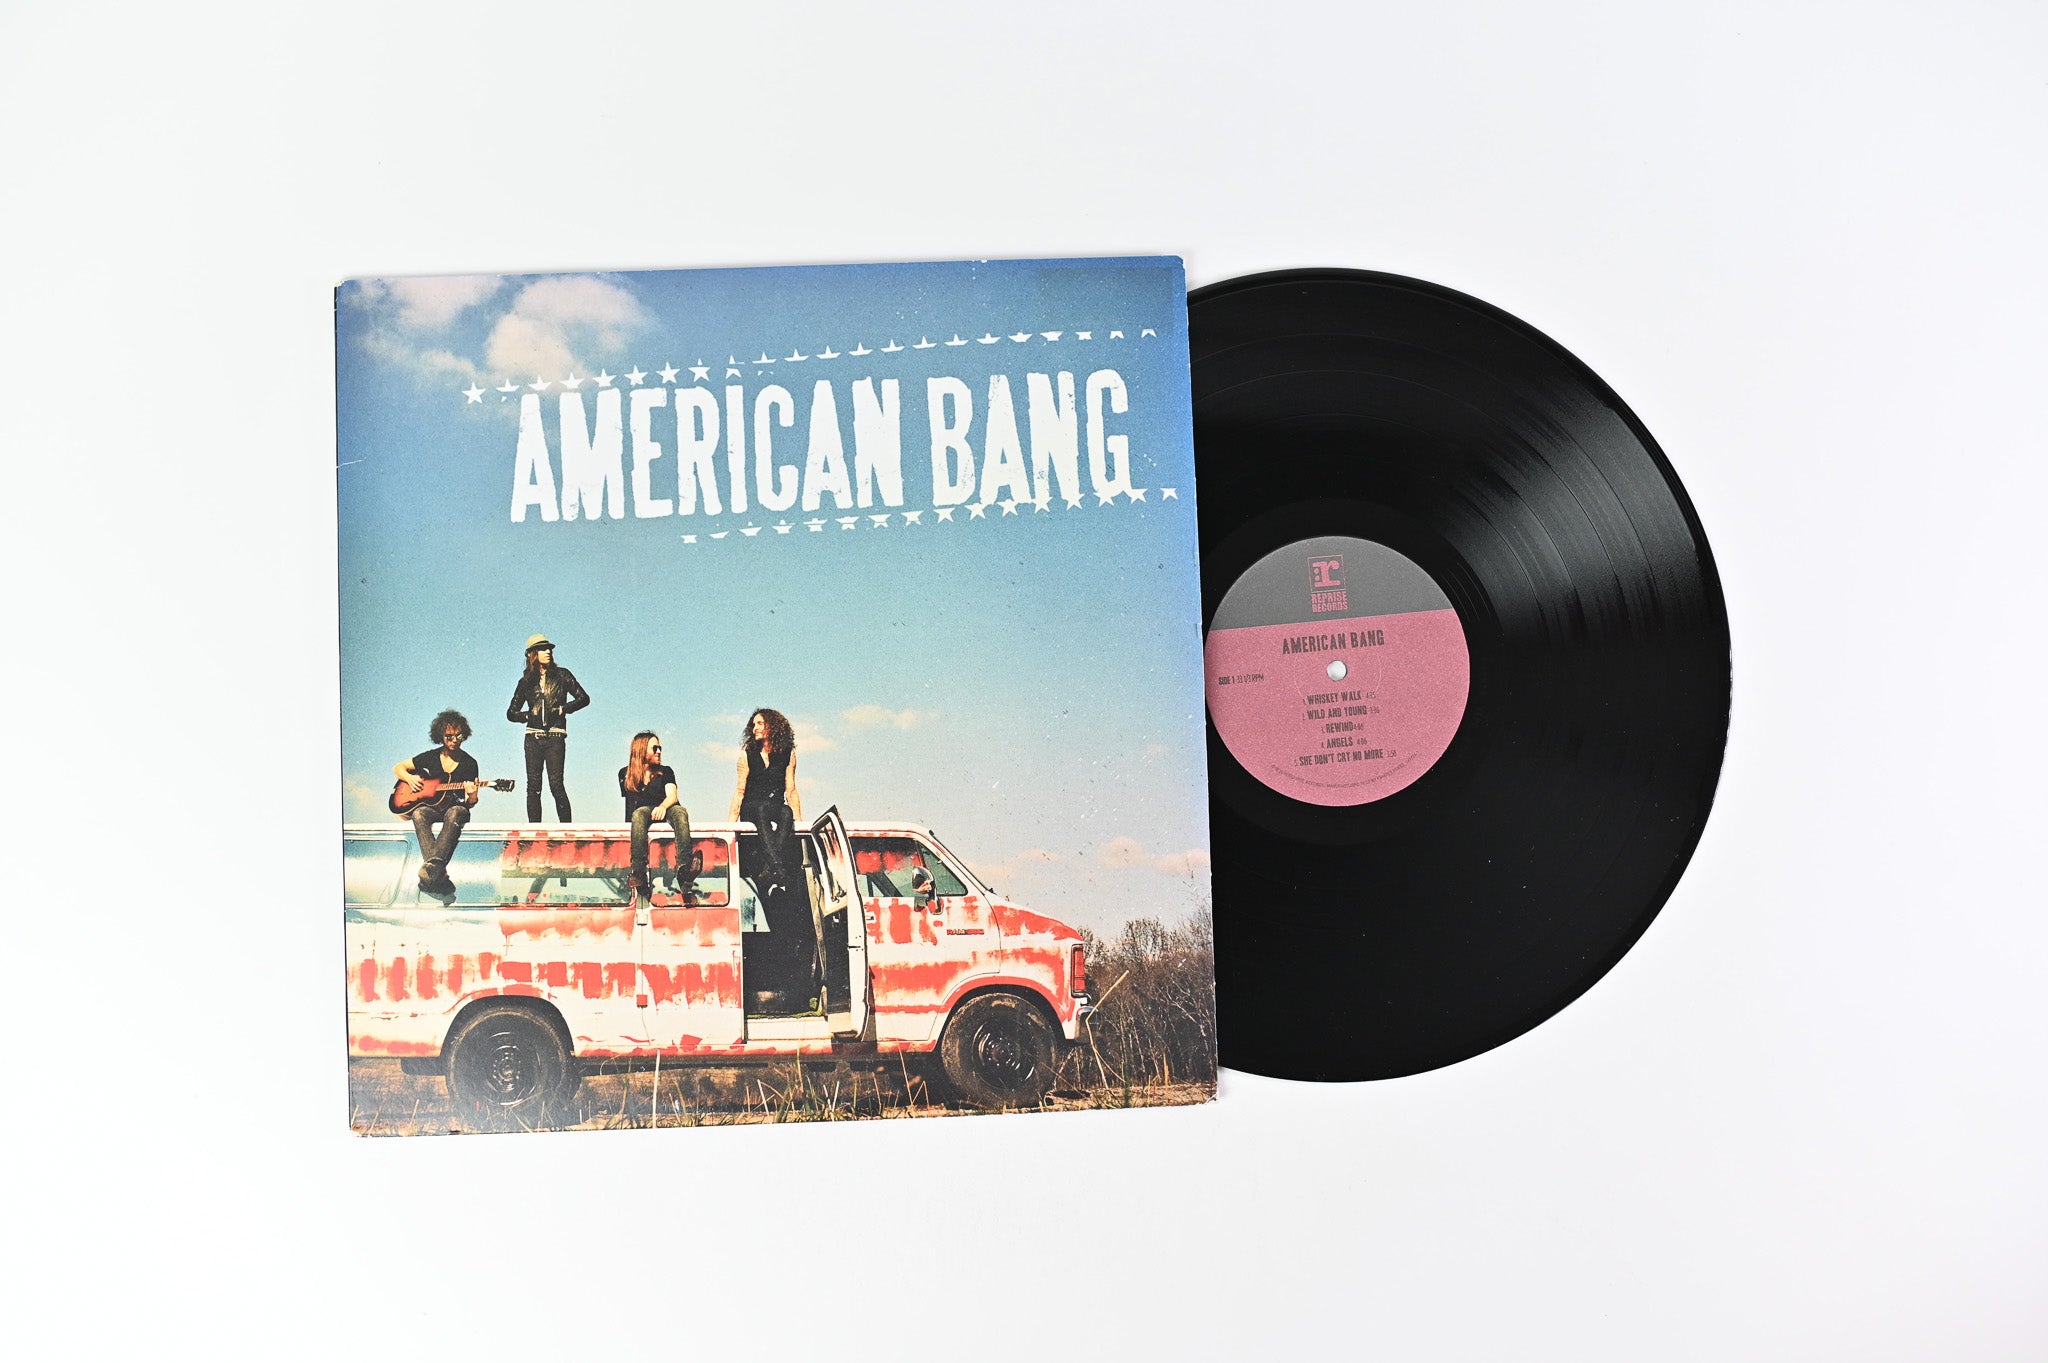 American Bang - American Bang on Warner Bros